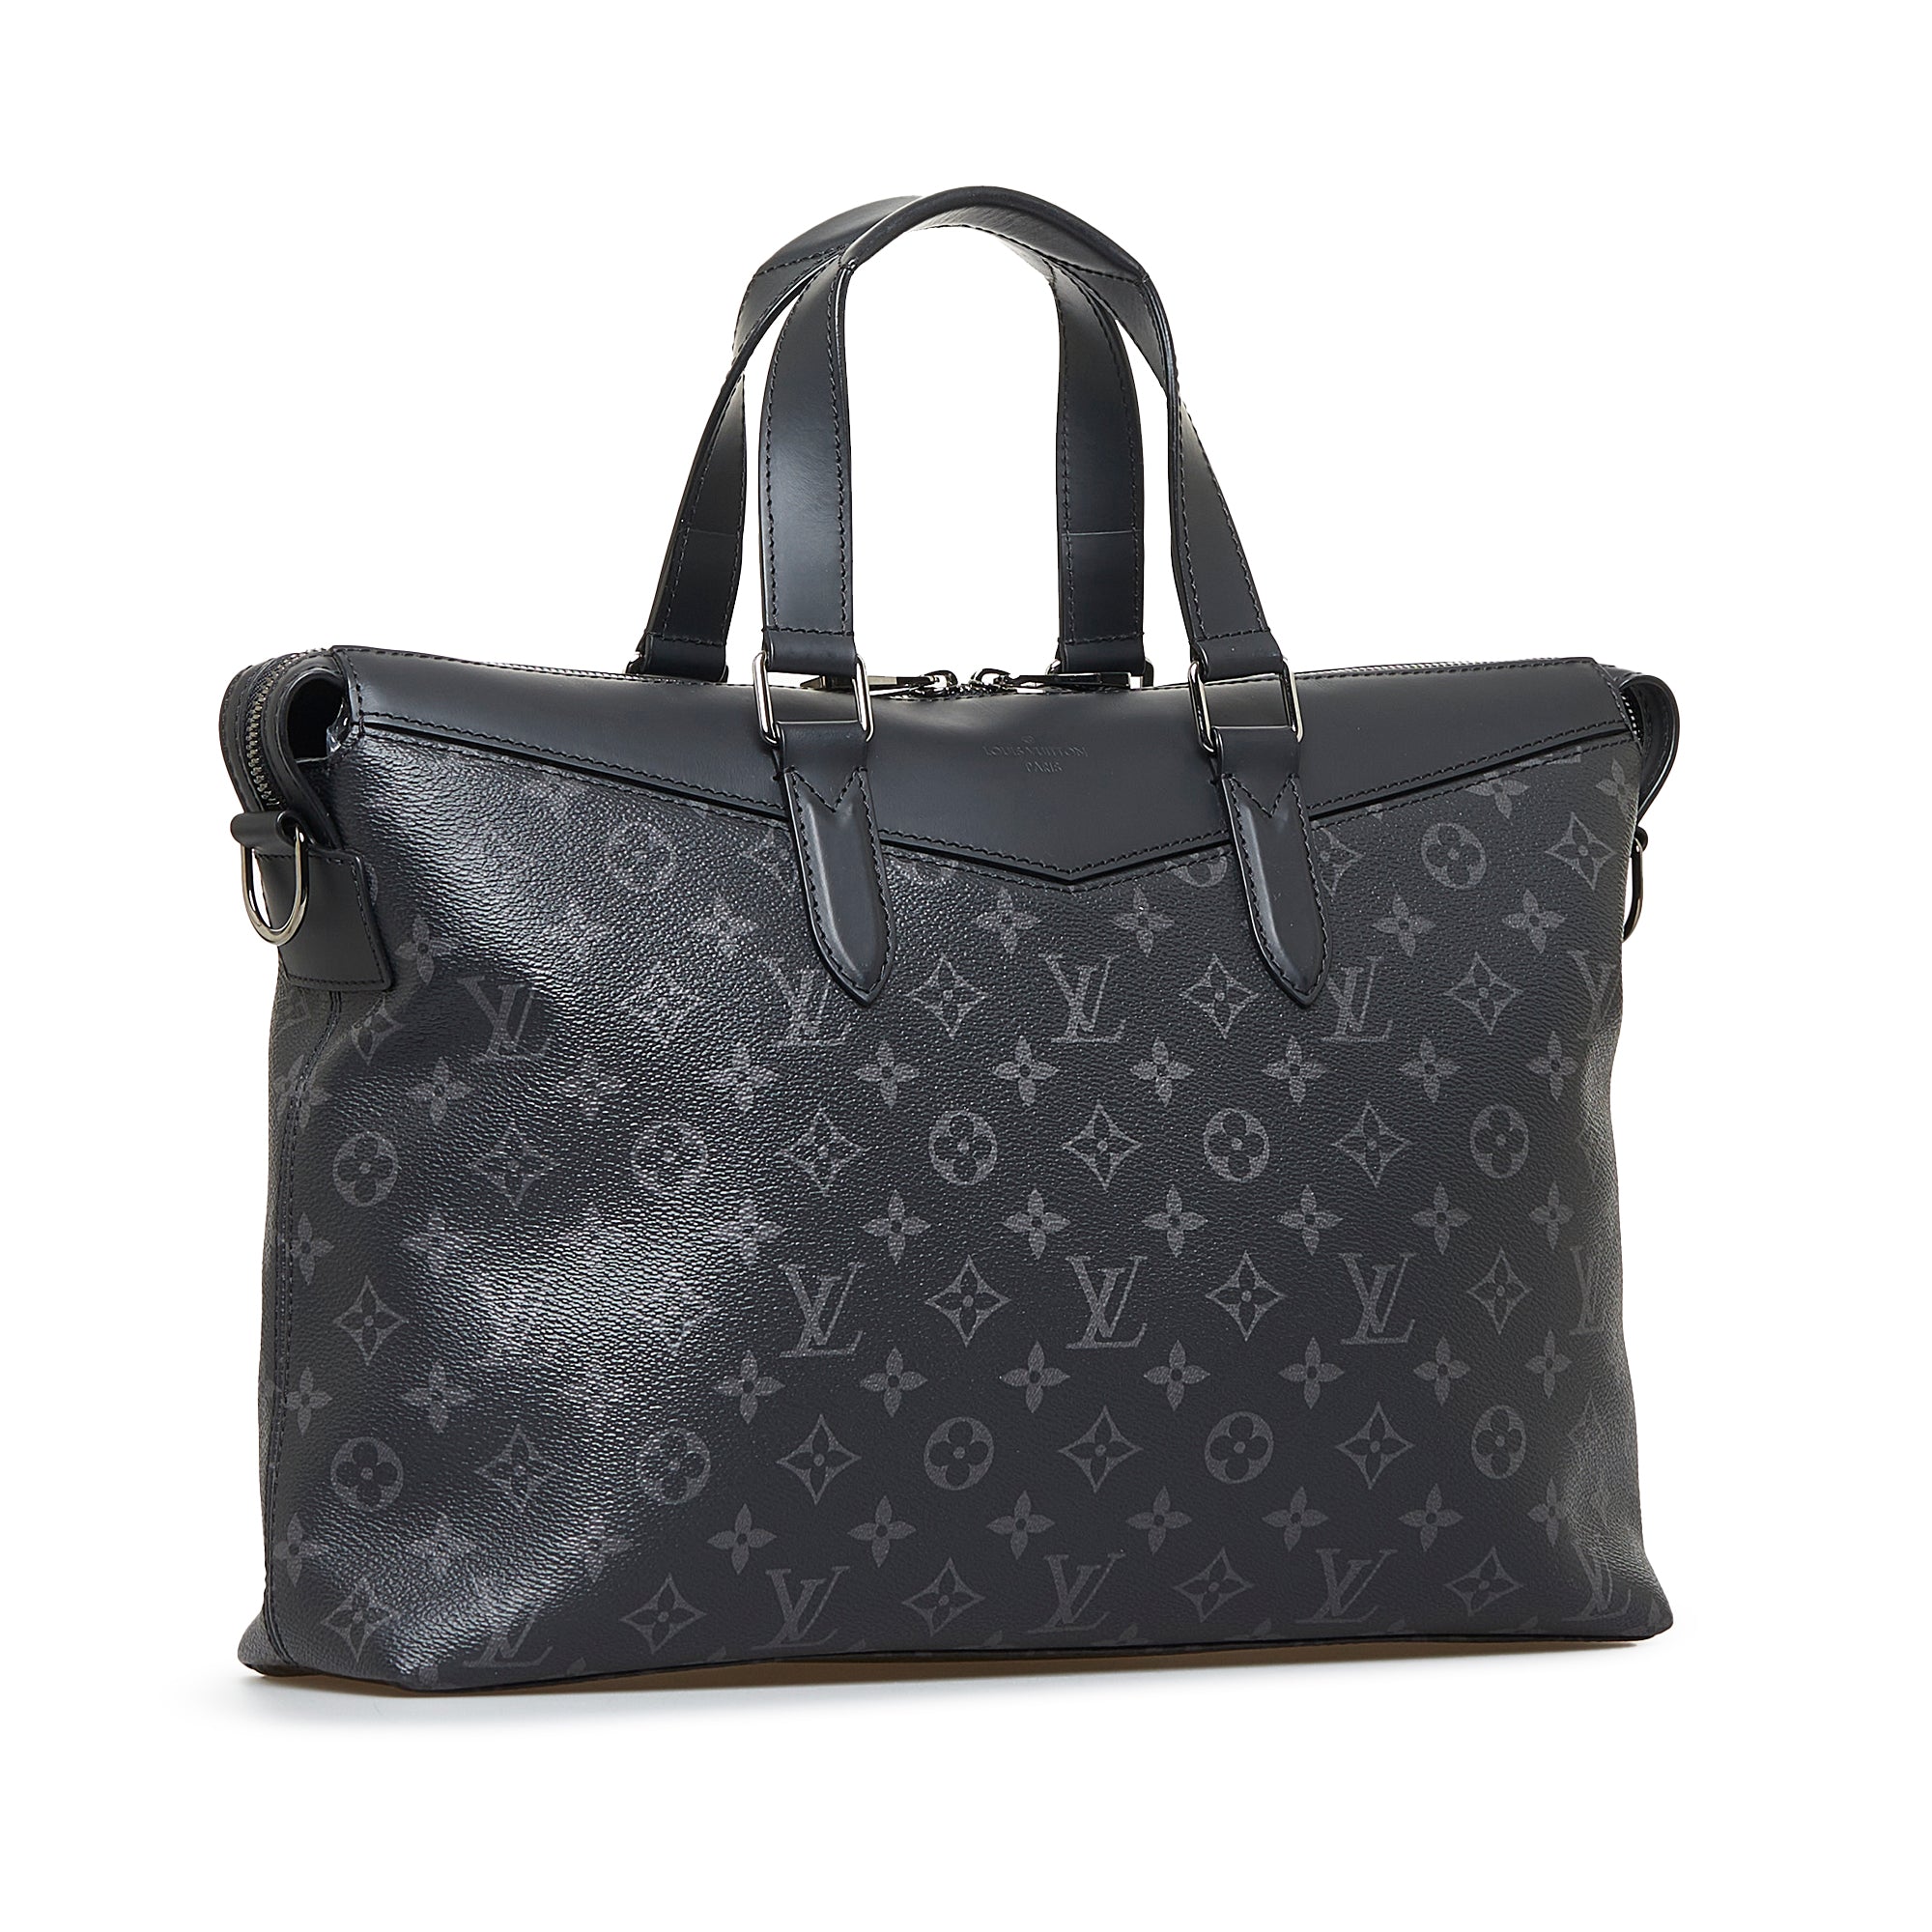 Louis Vuitton Monogram Illusion Multi-pocket Backpack.